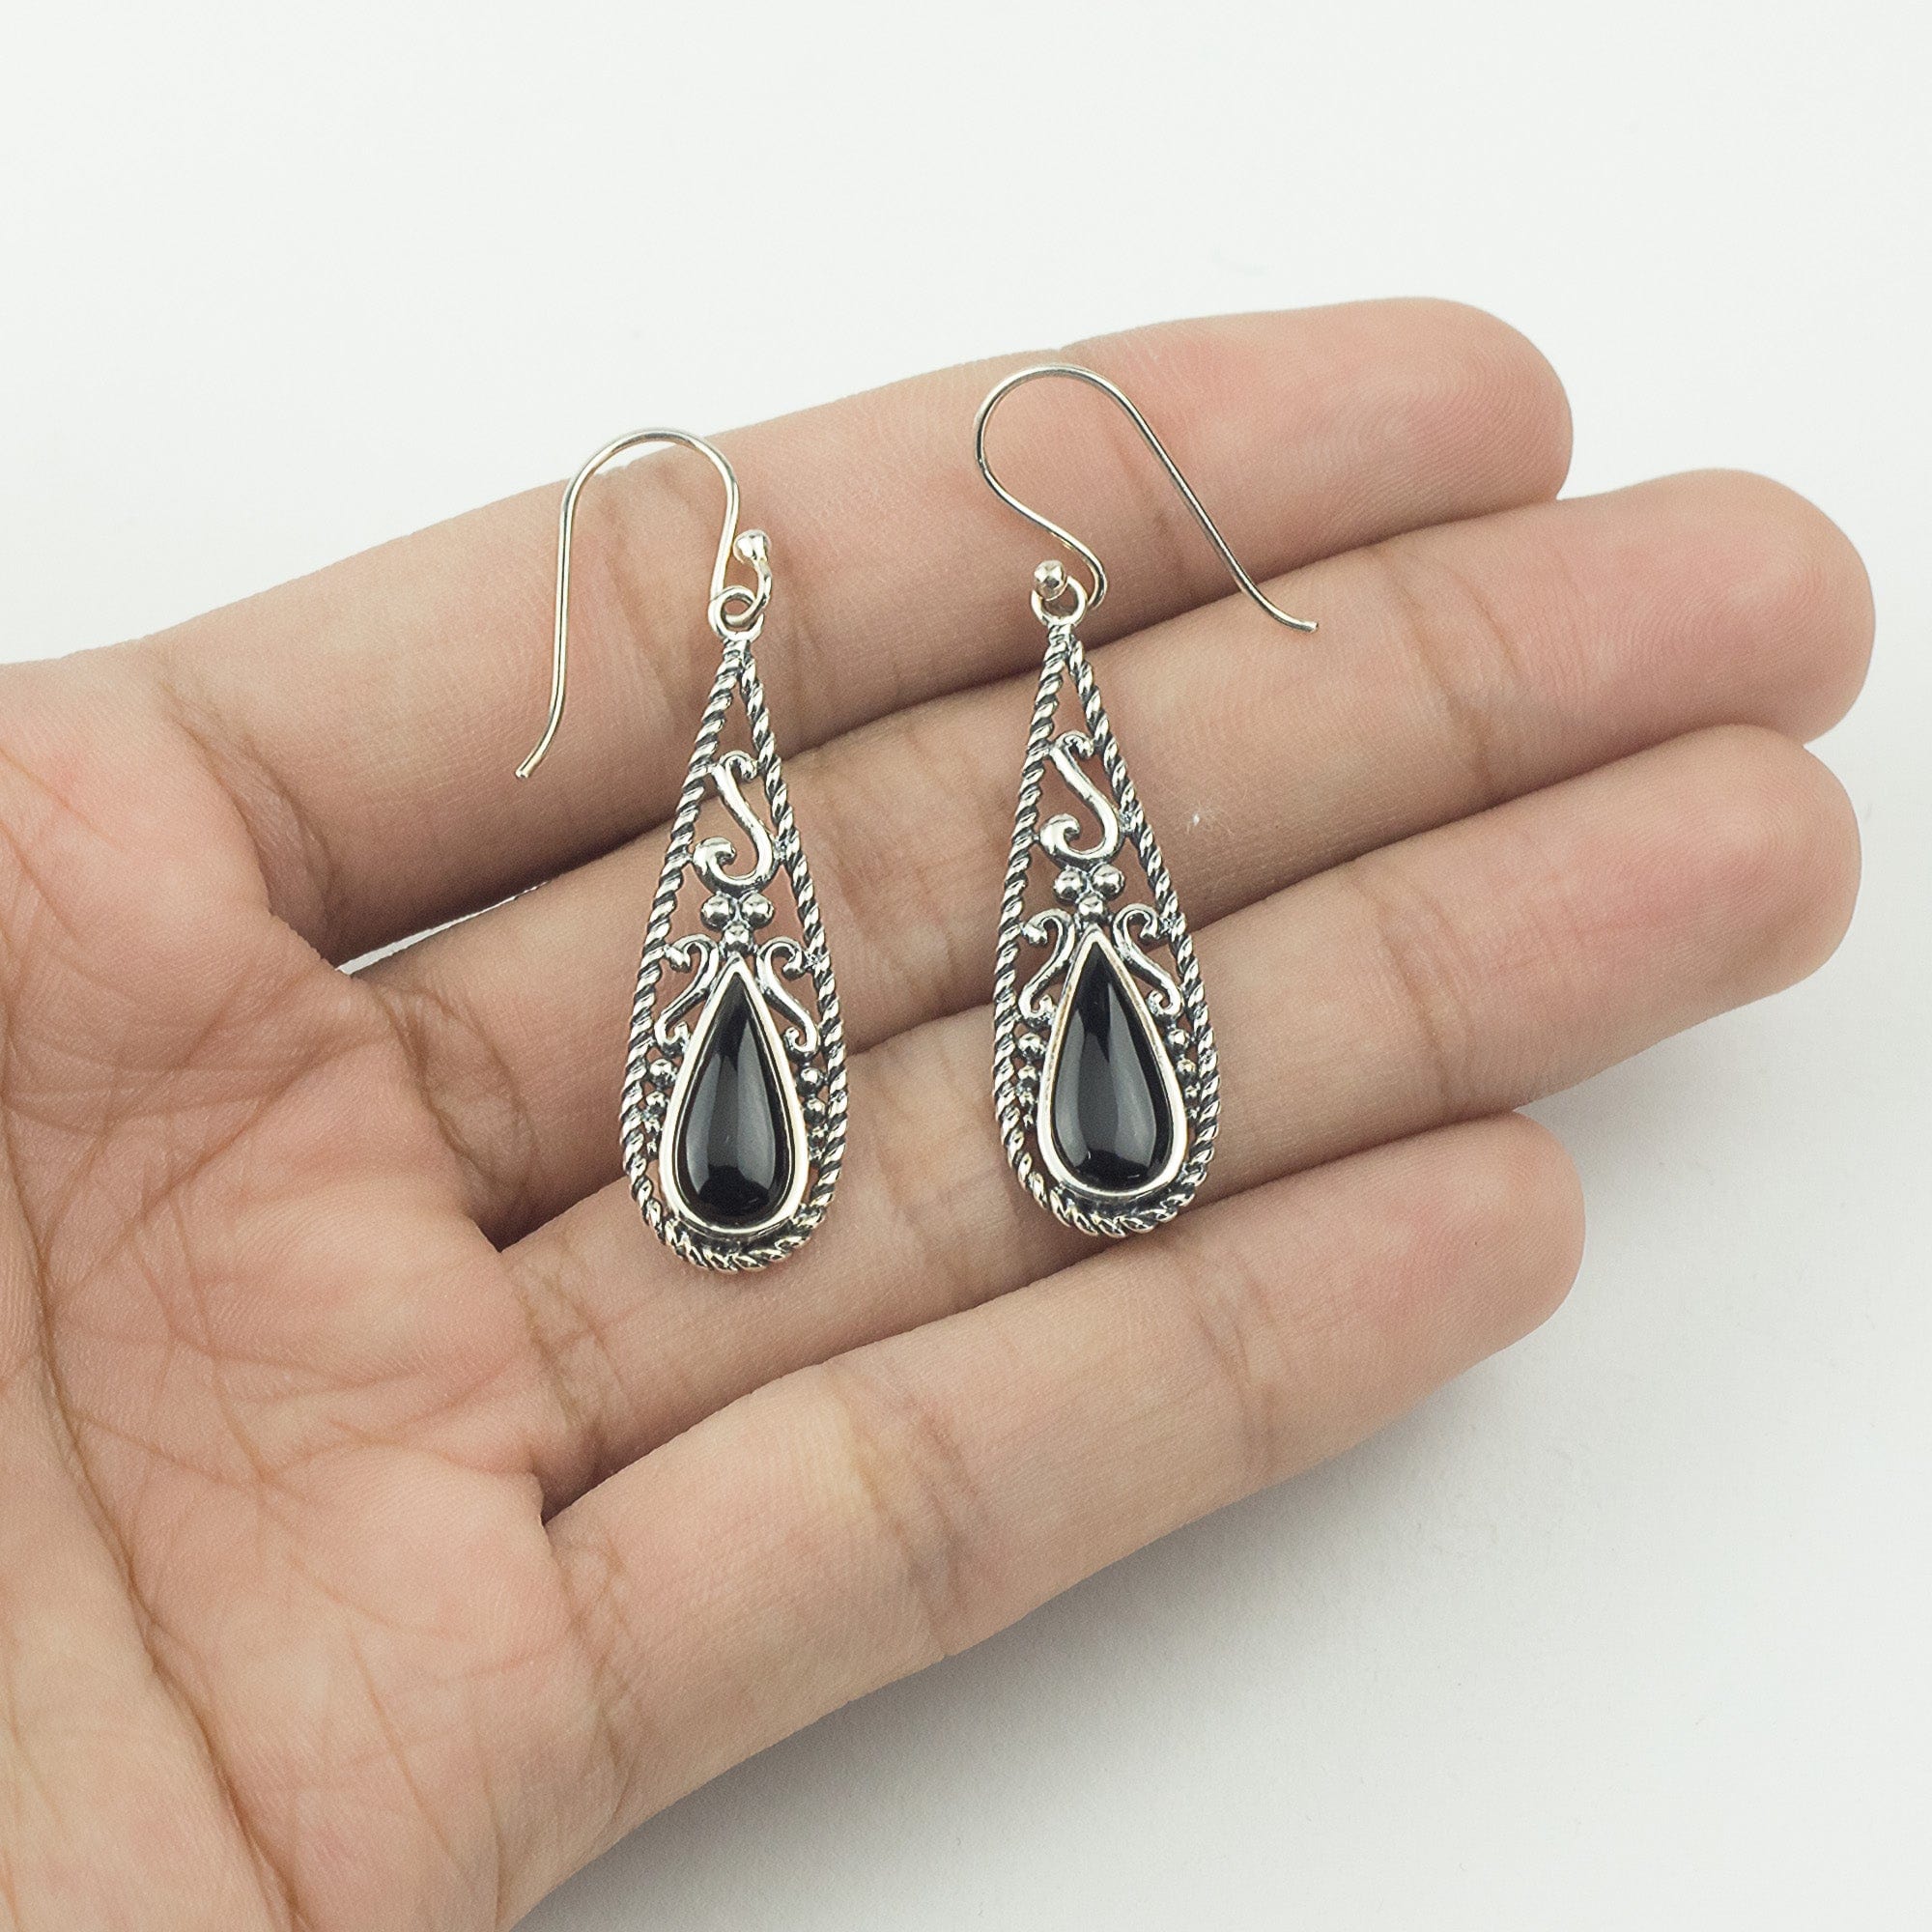 Boma Jewelry Earrings Bohemian Dangle Earrings with Stone